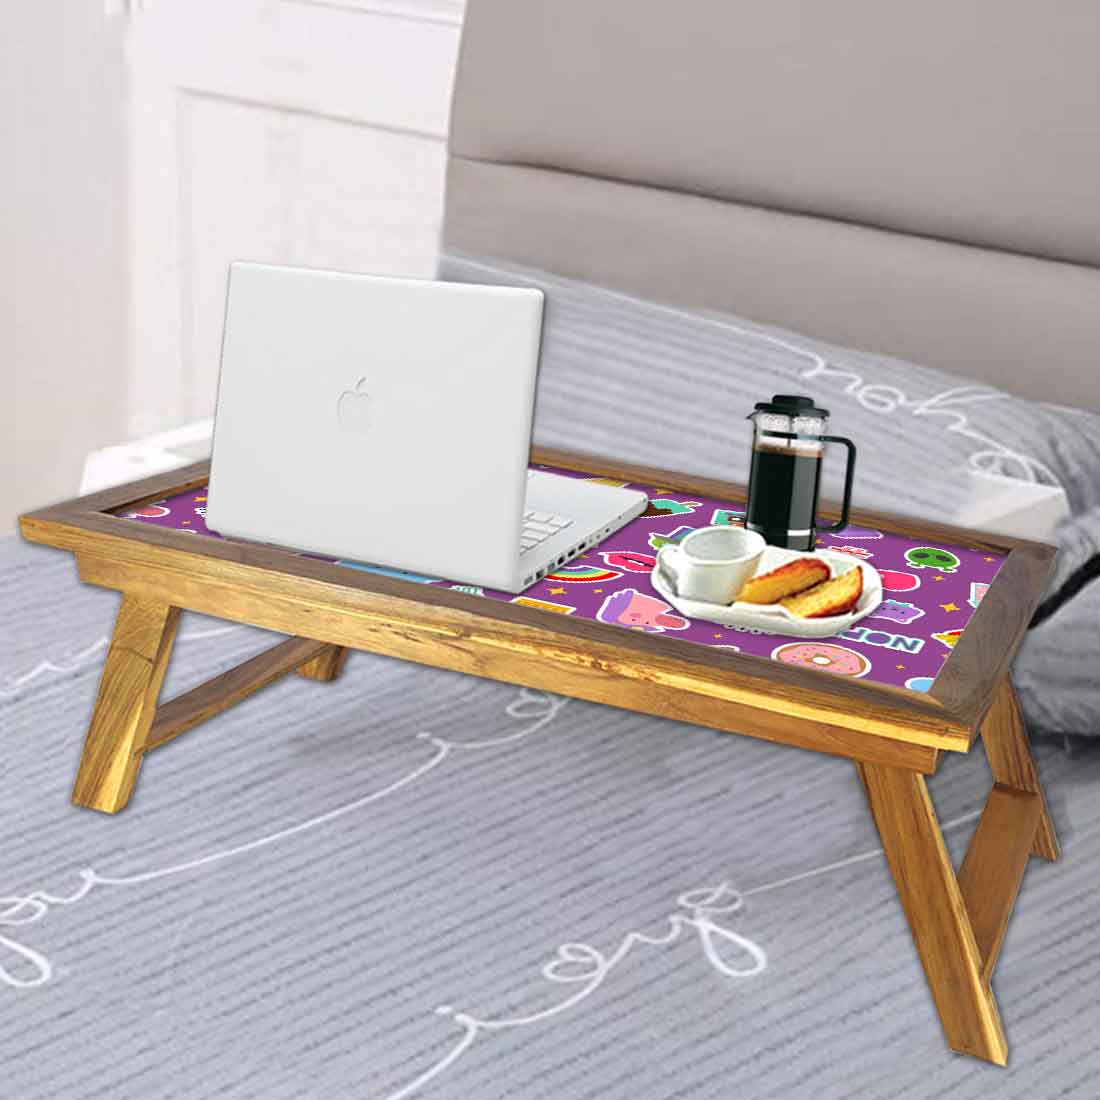 Nutcase Designer Folding Breakfast in Bed Tray Teak Wooden Study Desk - Kids Food Love Nutcase